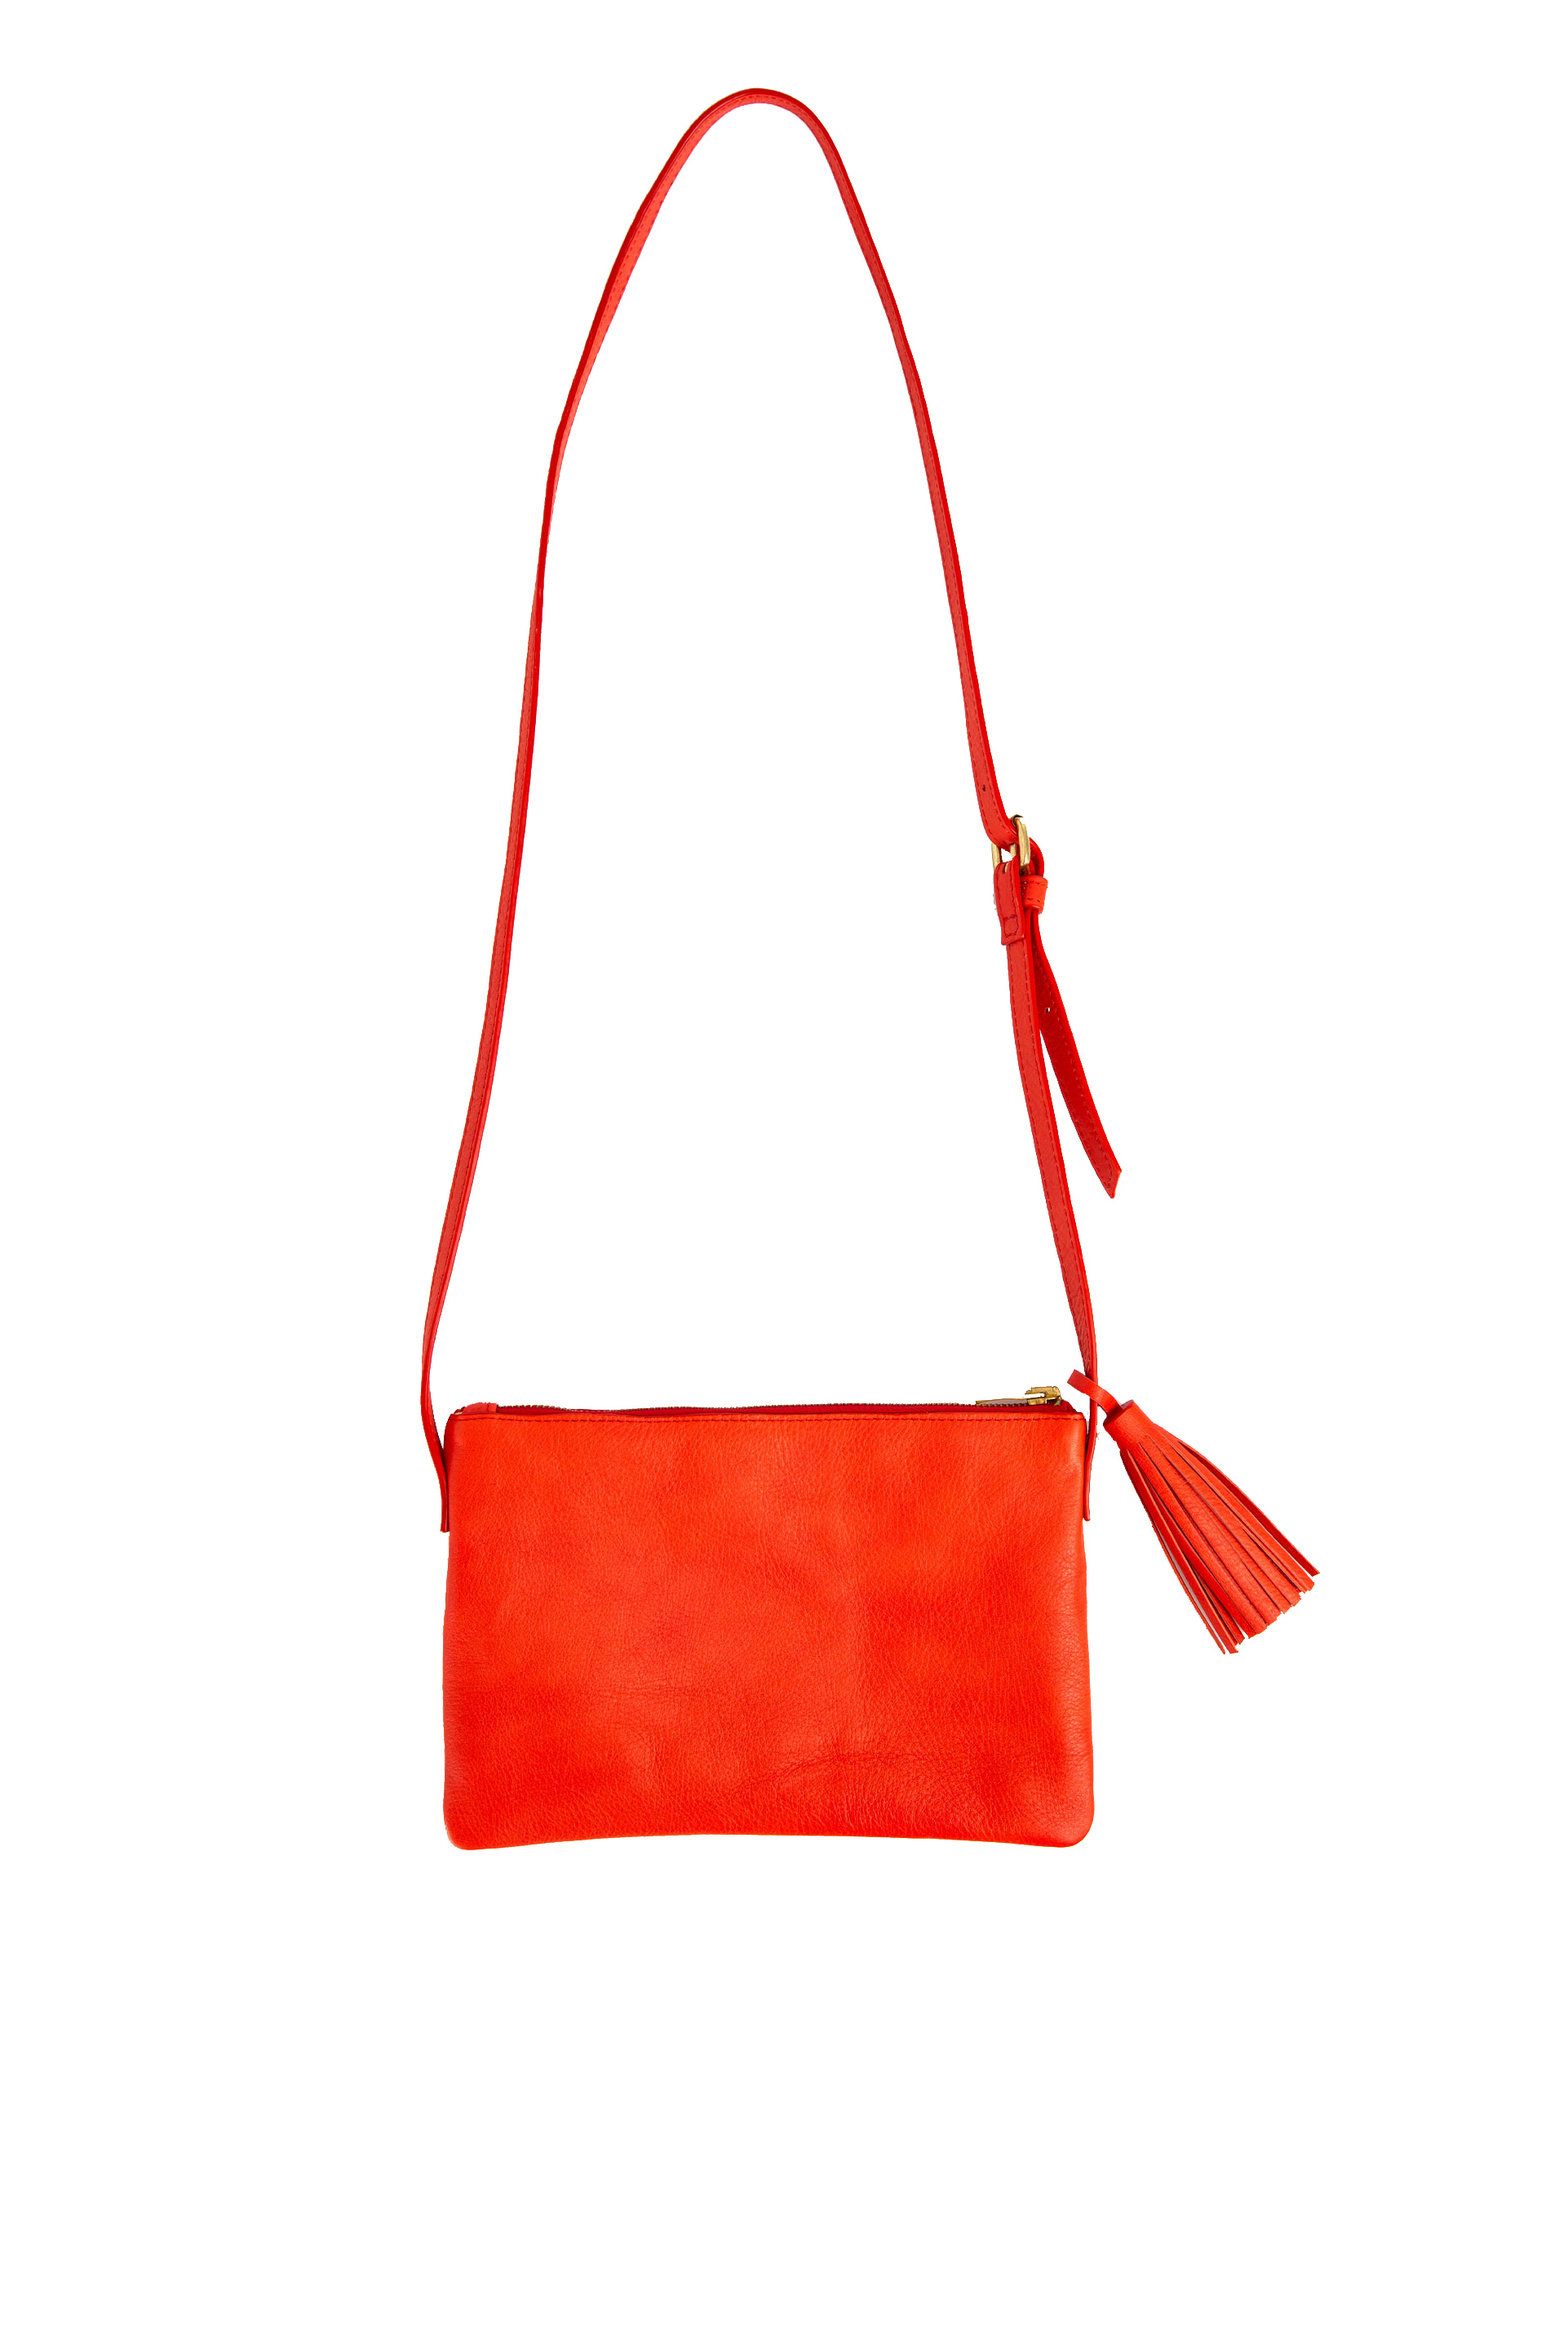 h5500_leather_tassel_bag_red_coral_white_background.jpg